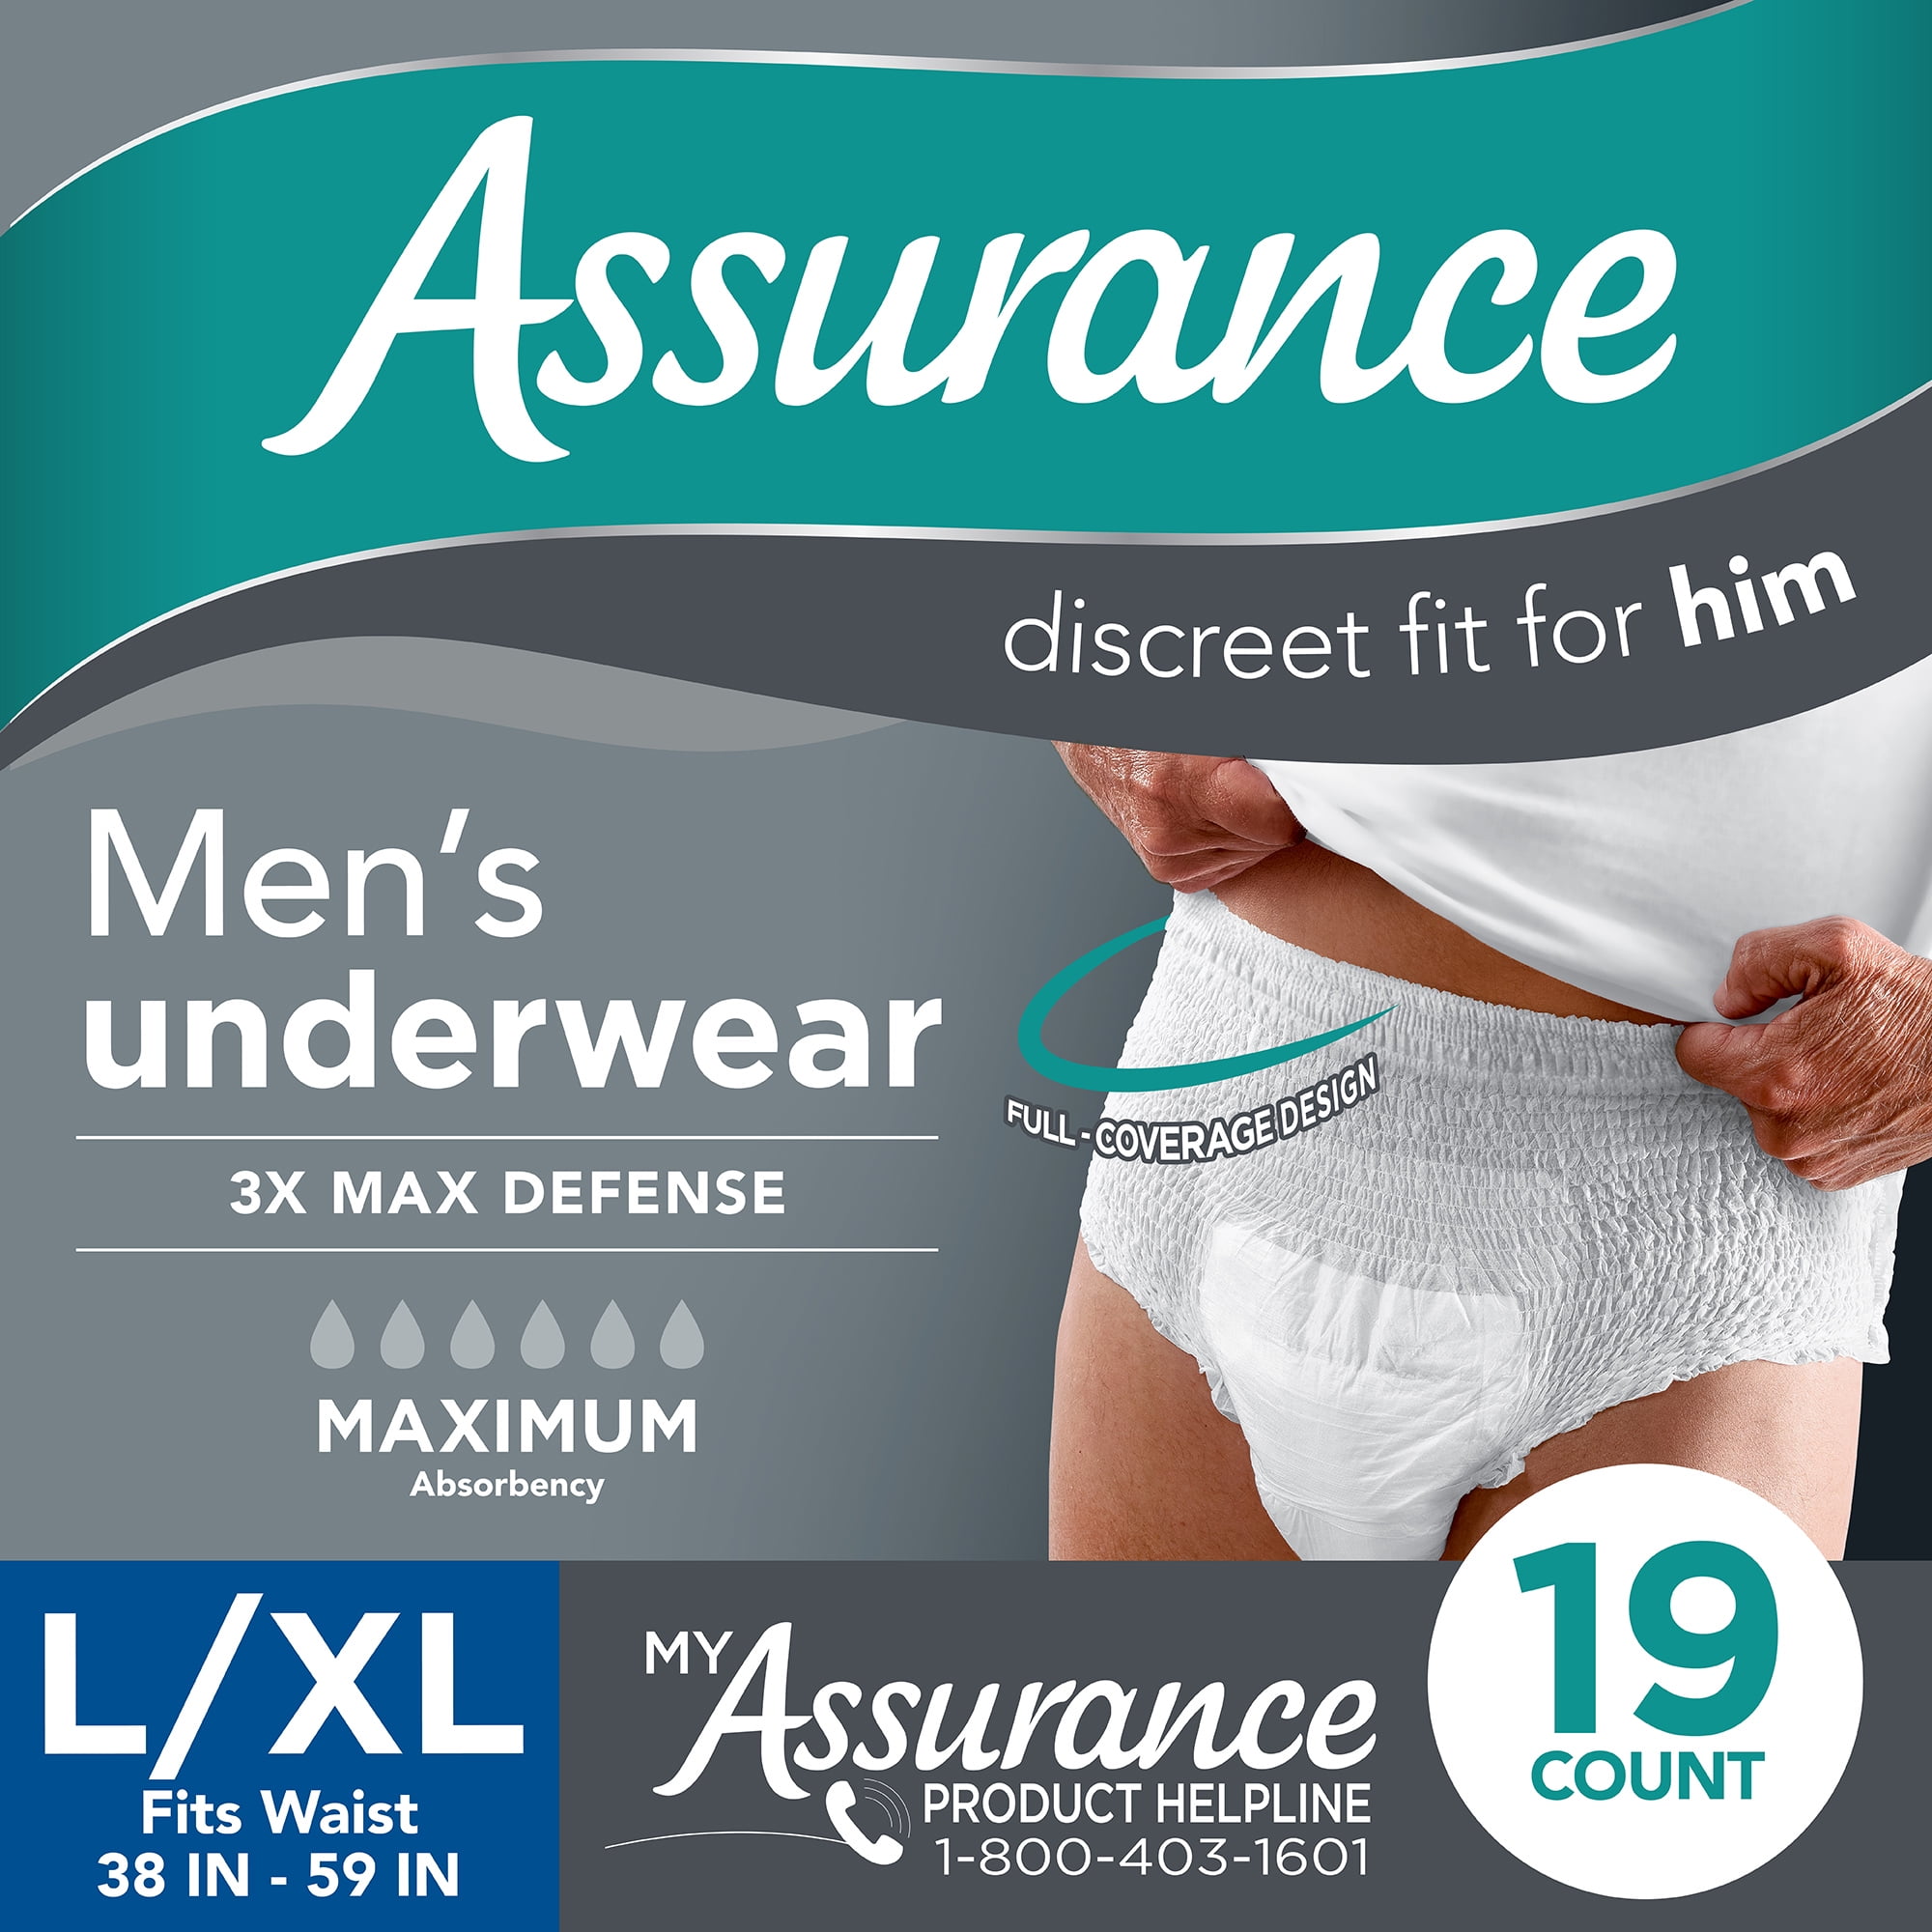 Equate Assurance Women's Underwear S/M 20 count, Light Lavender Odor Guard